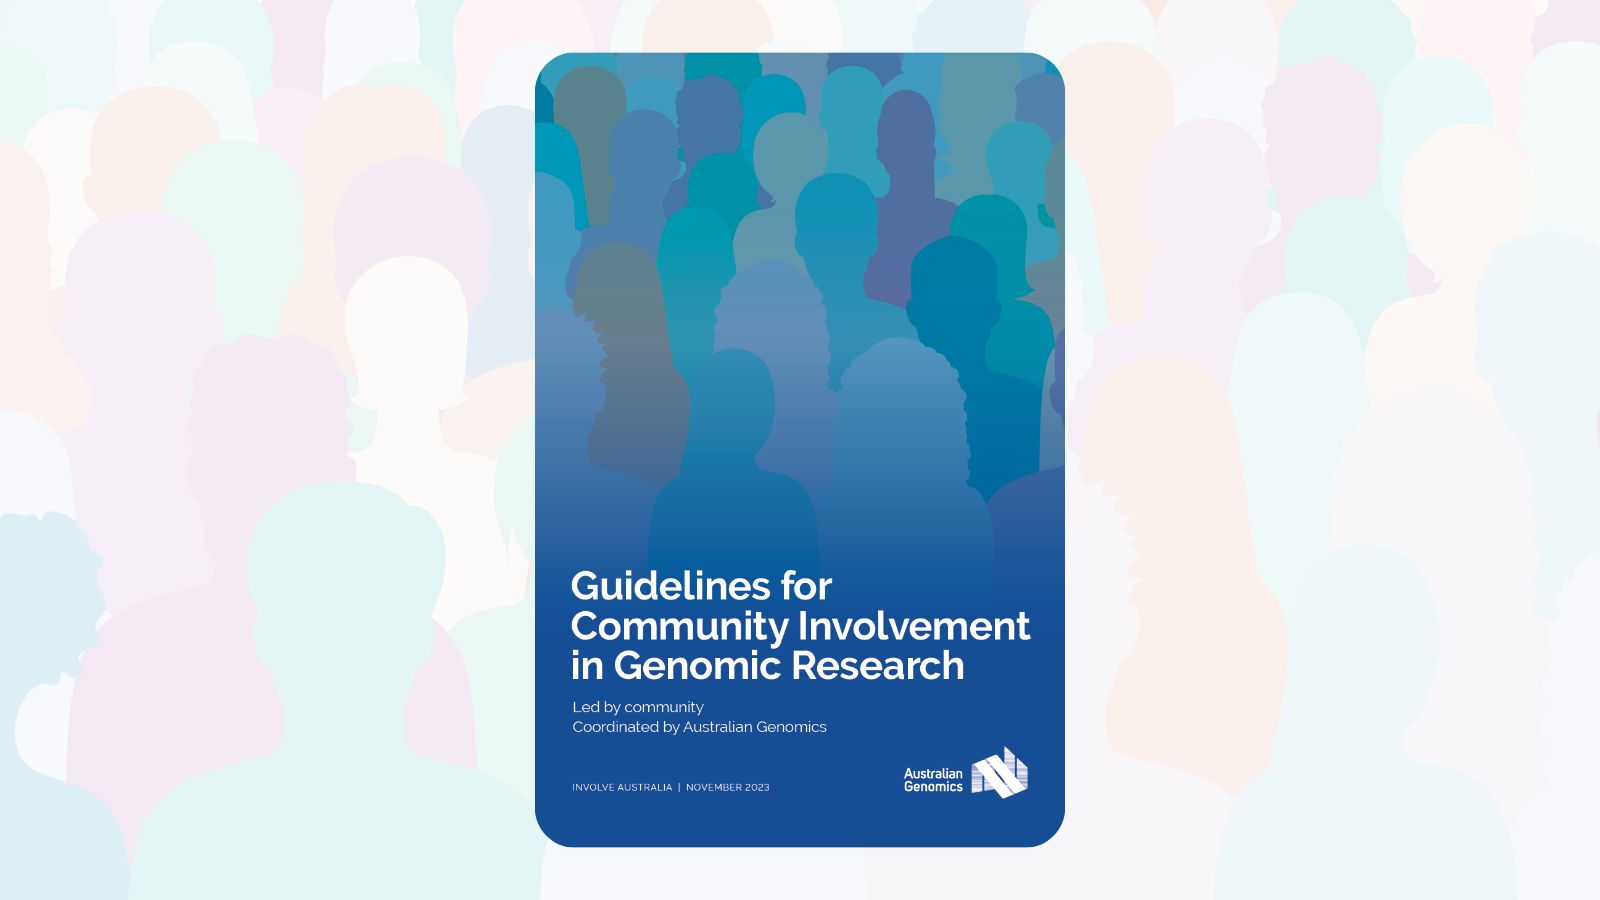 Involve Australia Guidelines for Community Involvement in Genomic Research